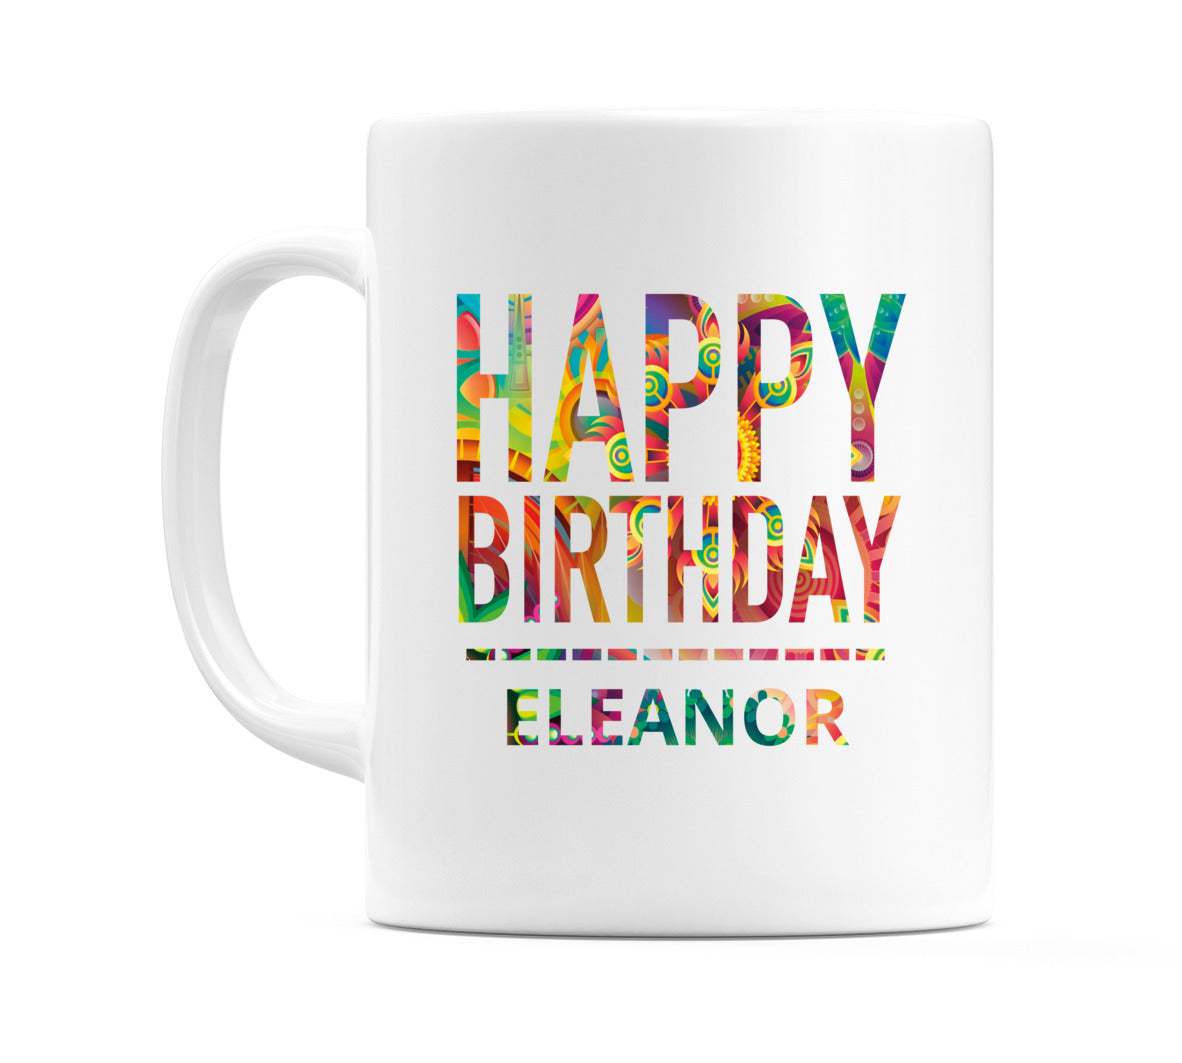 Happy Birthday Eleanor (Tie Dye Effect) Mug Cup by WeDoMugs